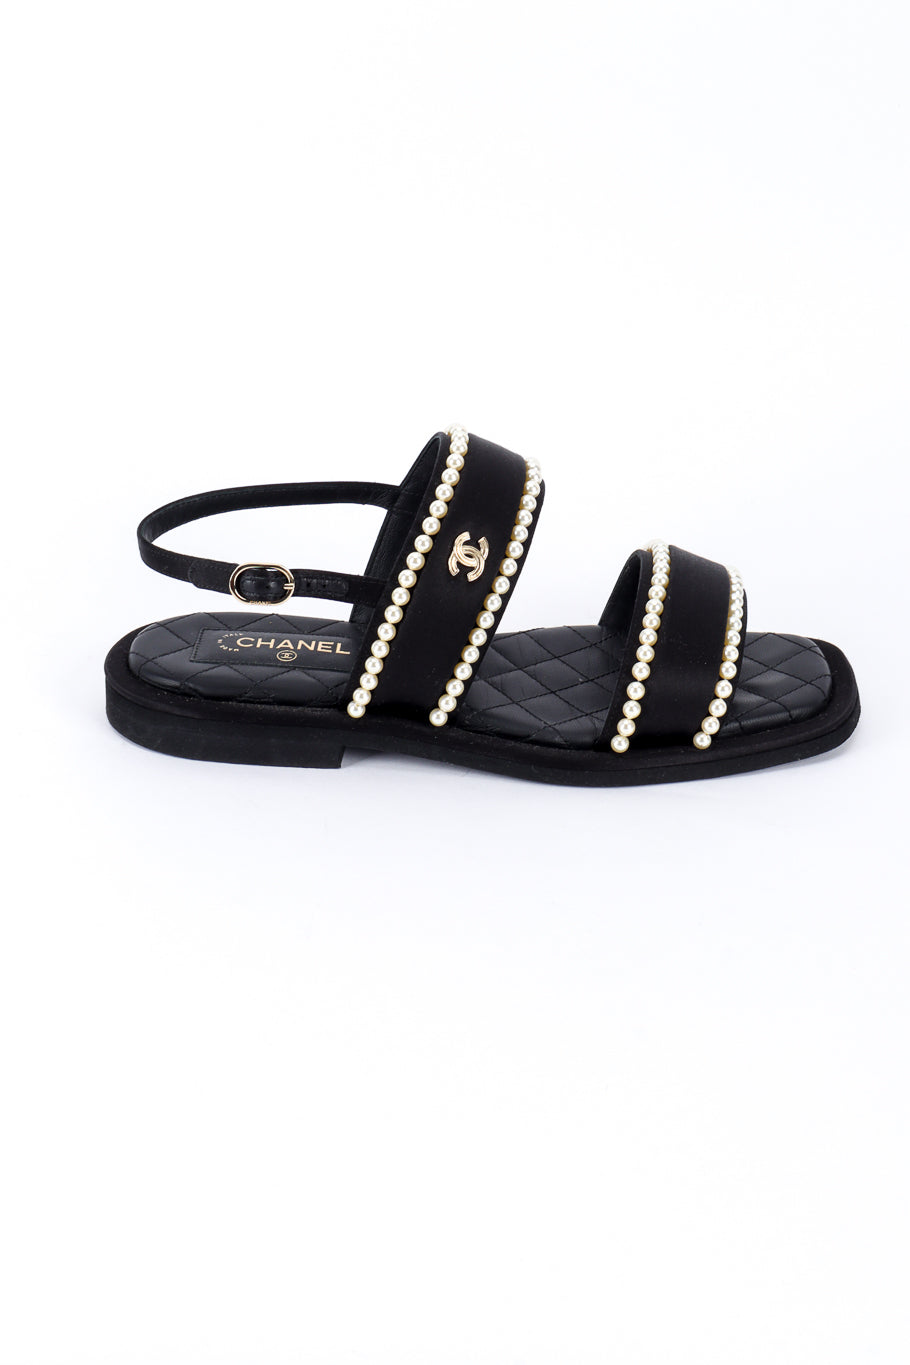 Chanel CC Satin & Pearl Sandals right shoe outer side @recess la